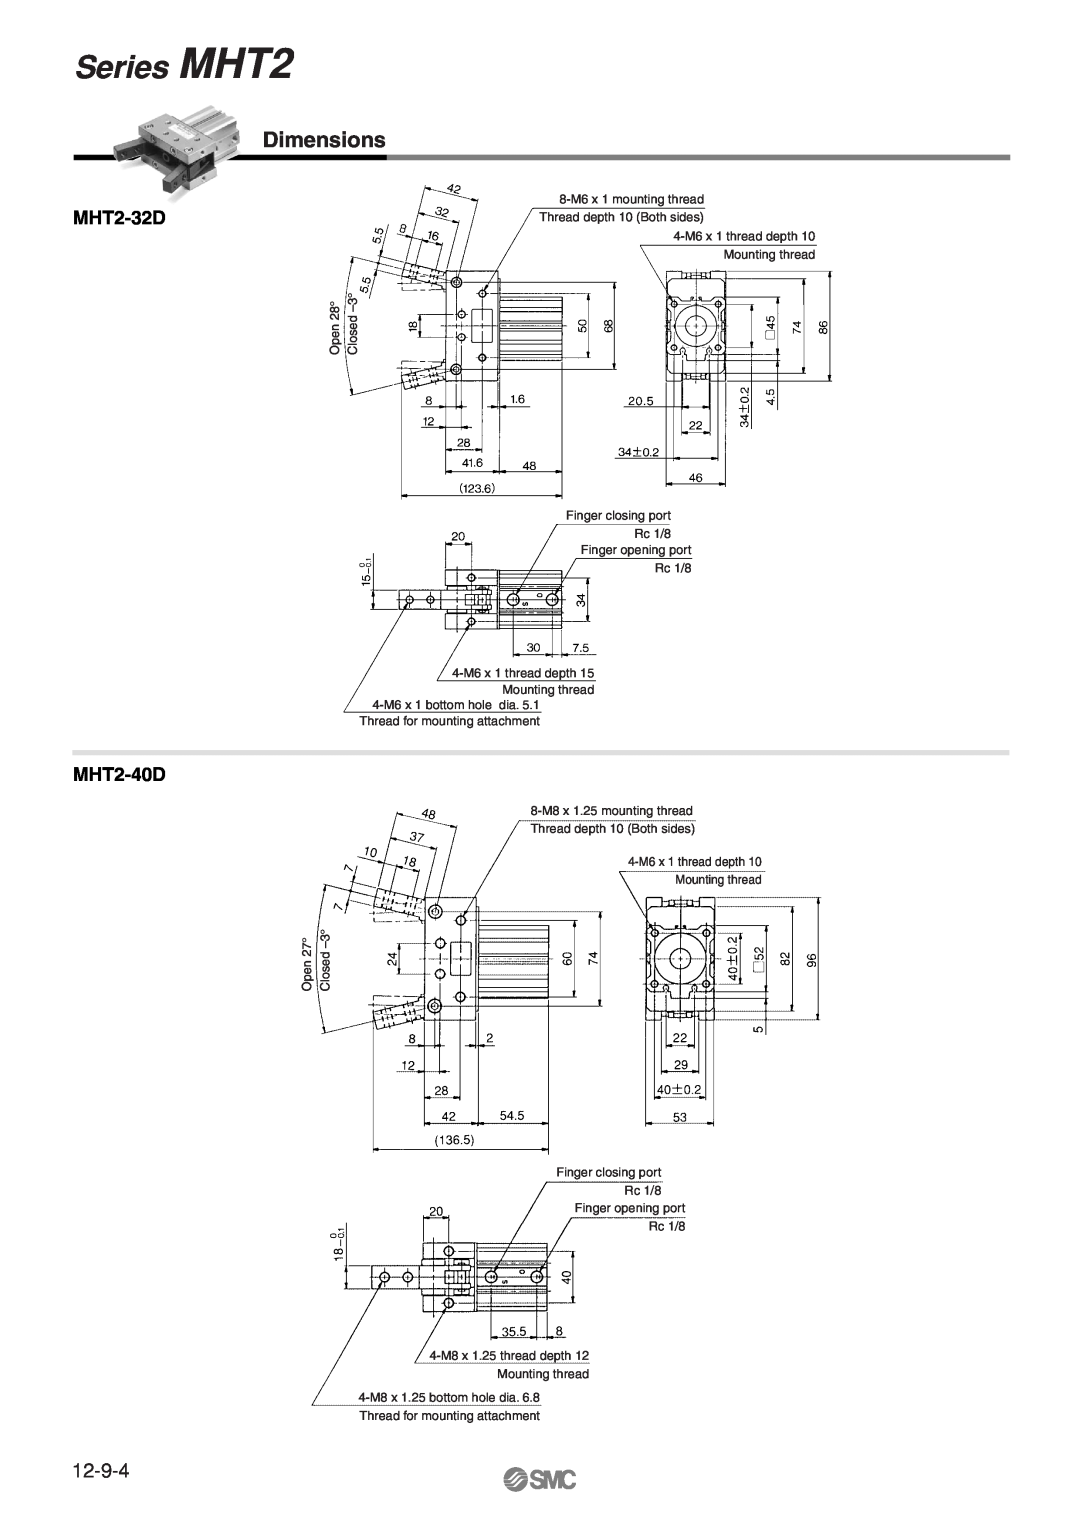 SMC Networks manual Series MHT2, Dimensions, 12-9-4 